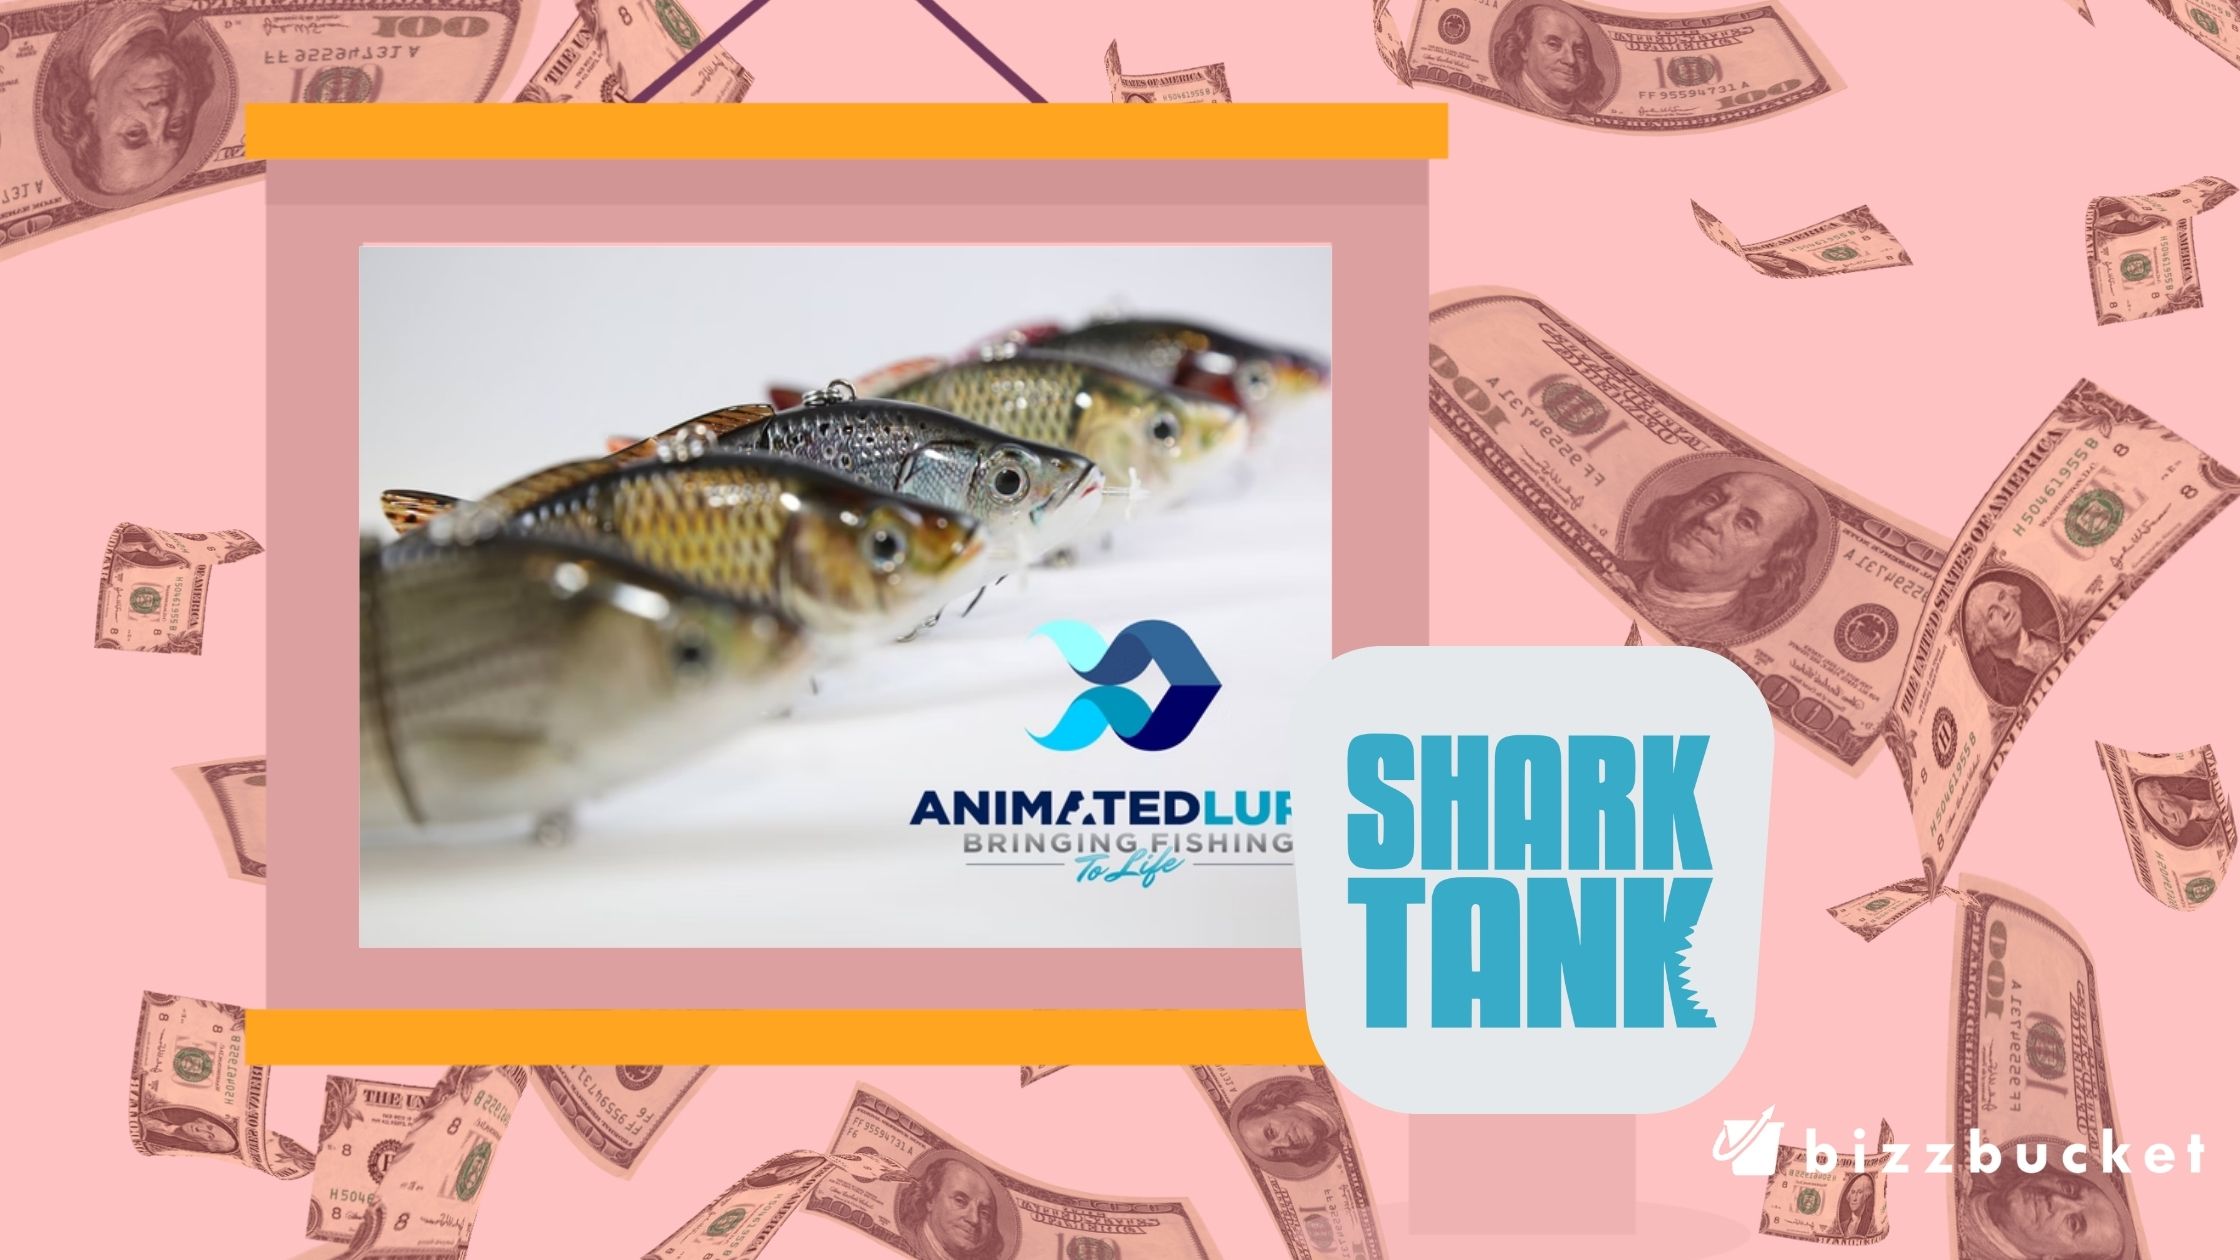 Animated Lure shark tank update